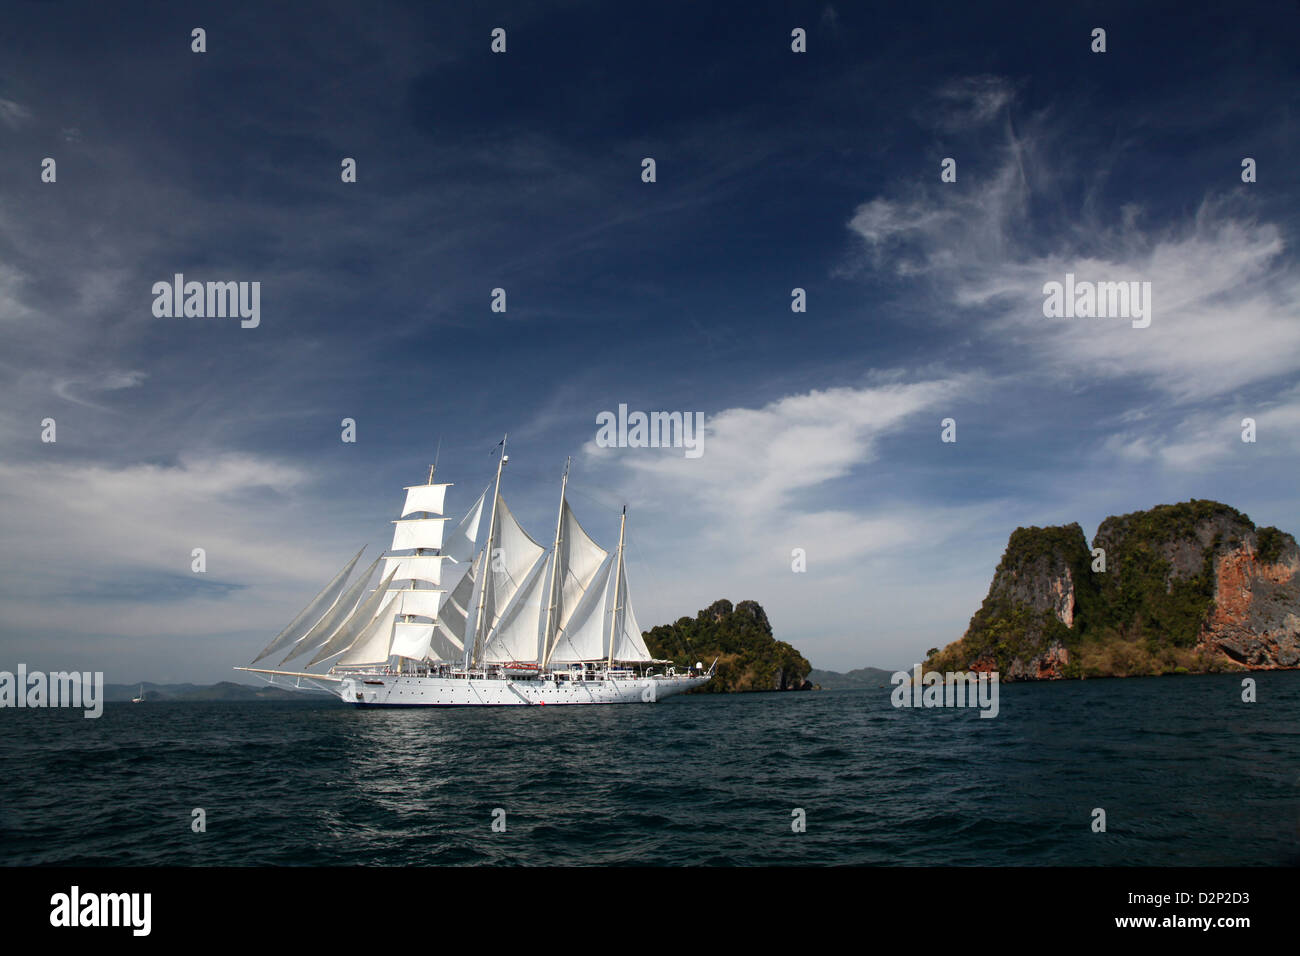 A sailing ship under full sail in the Andaman Sea, Thailand Stock Photo